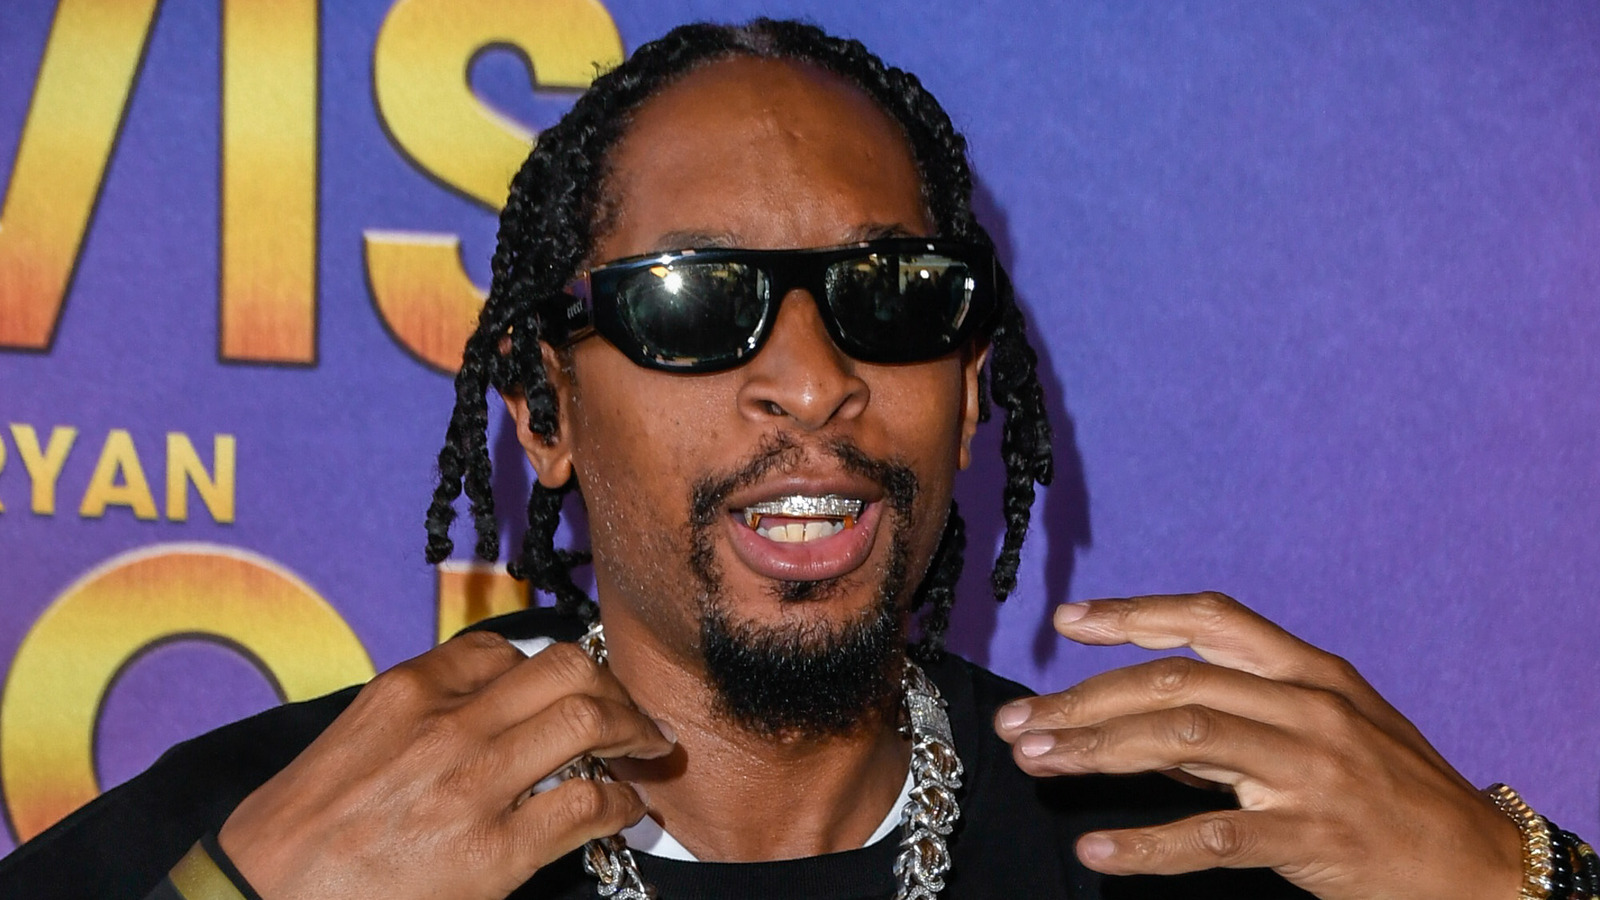 Lil Jon's Journey From Rapper To HGTV Design Star